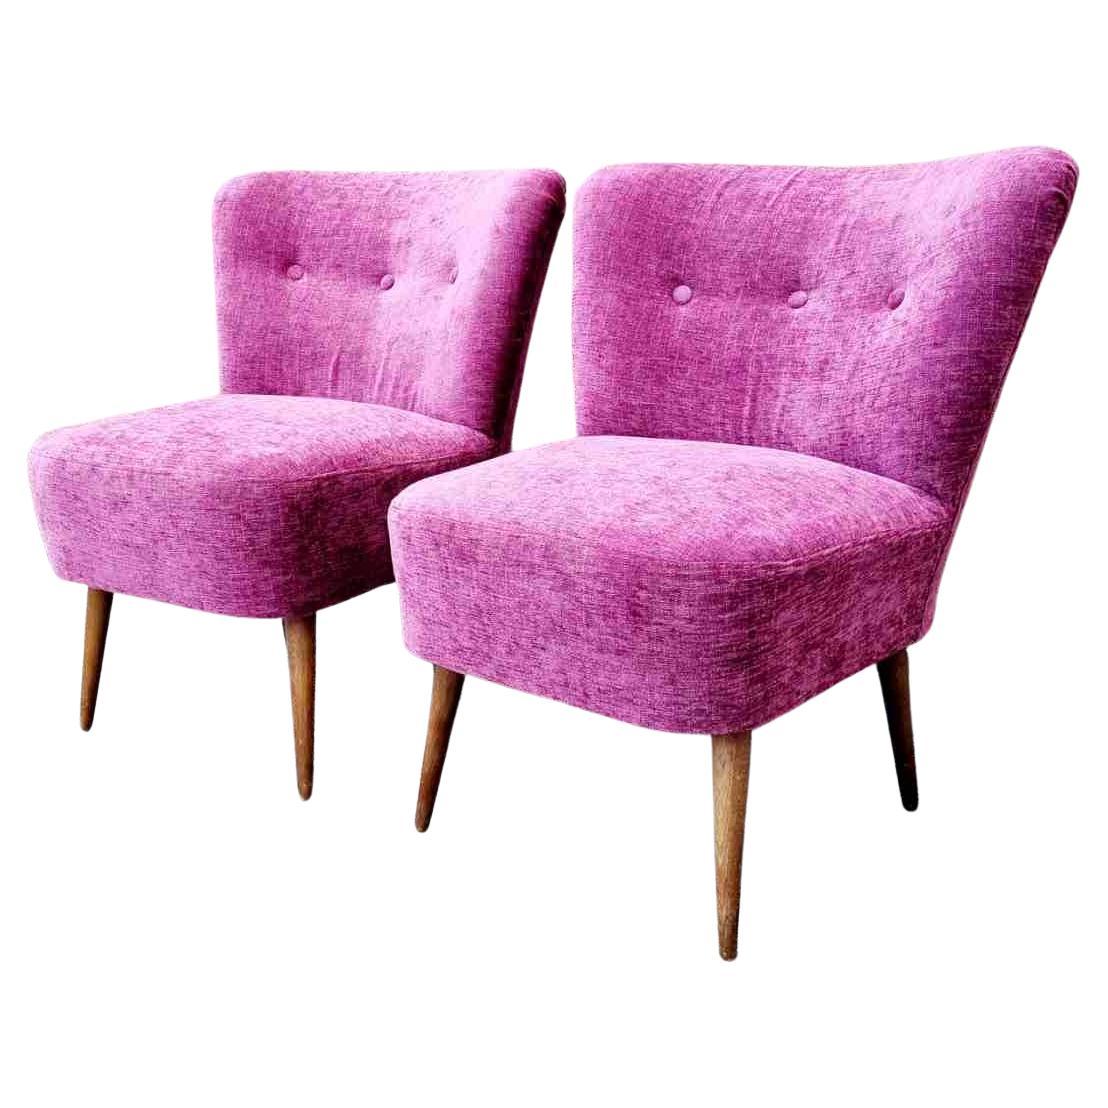 Pair of Midcentury Cocktail Chairs, Scandinavian Design, 60s